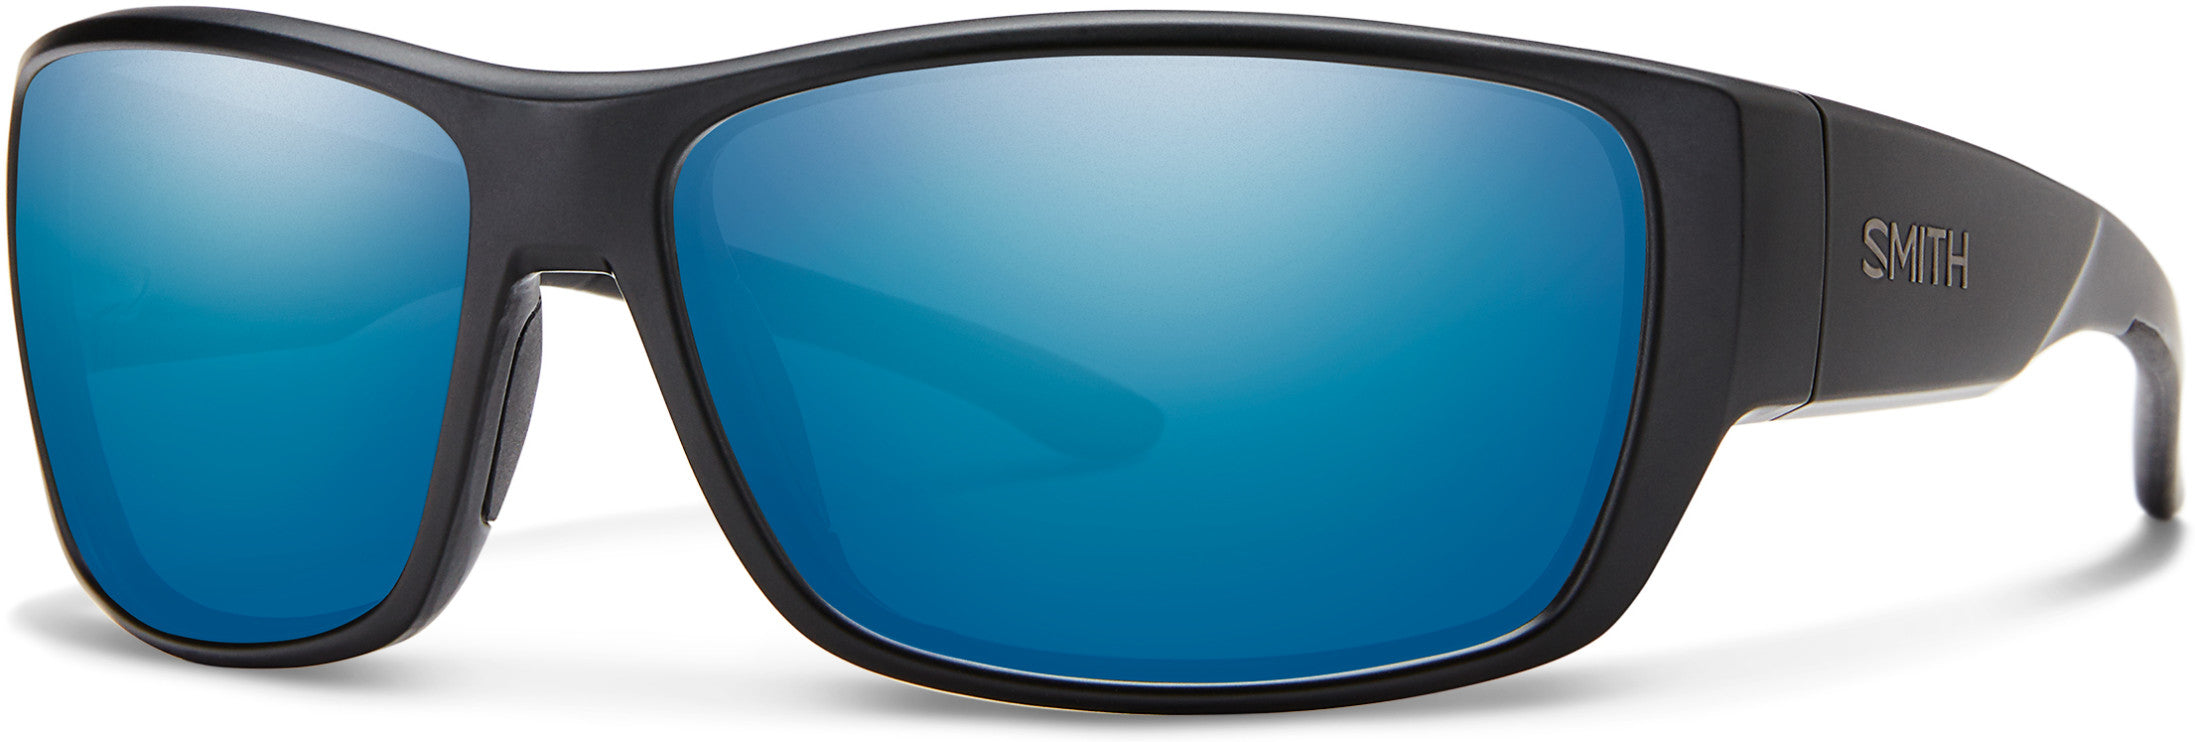 Smith Forge Rectangular Sunglasses 0003-0003  Matte Black (Z0 Ml Blue)